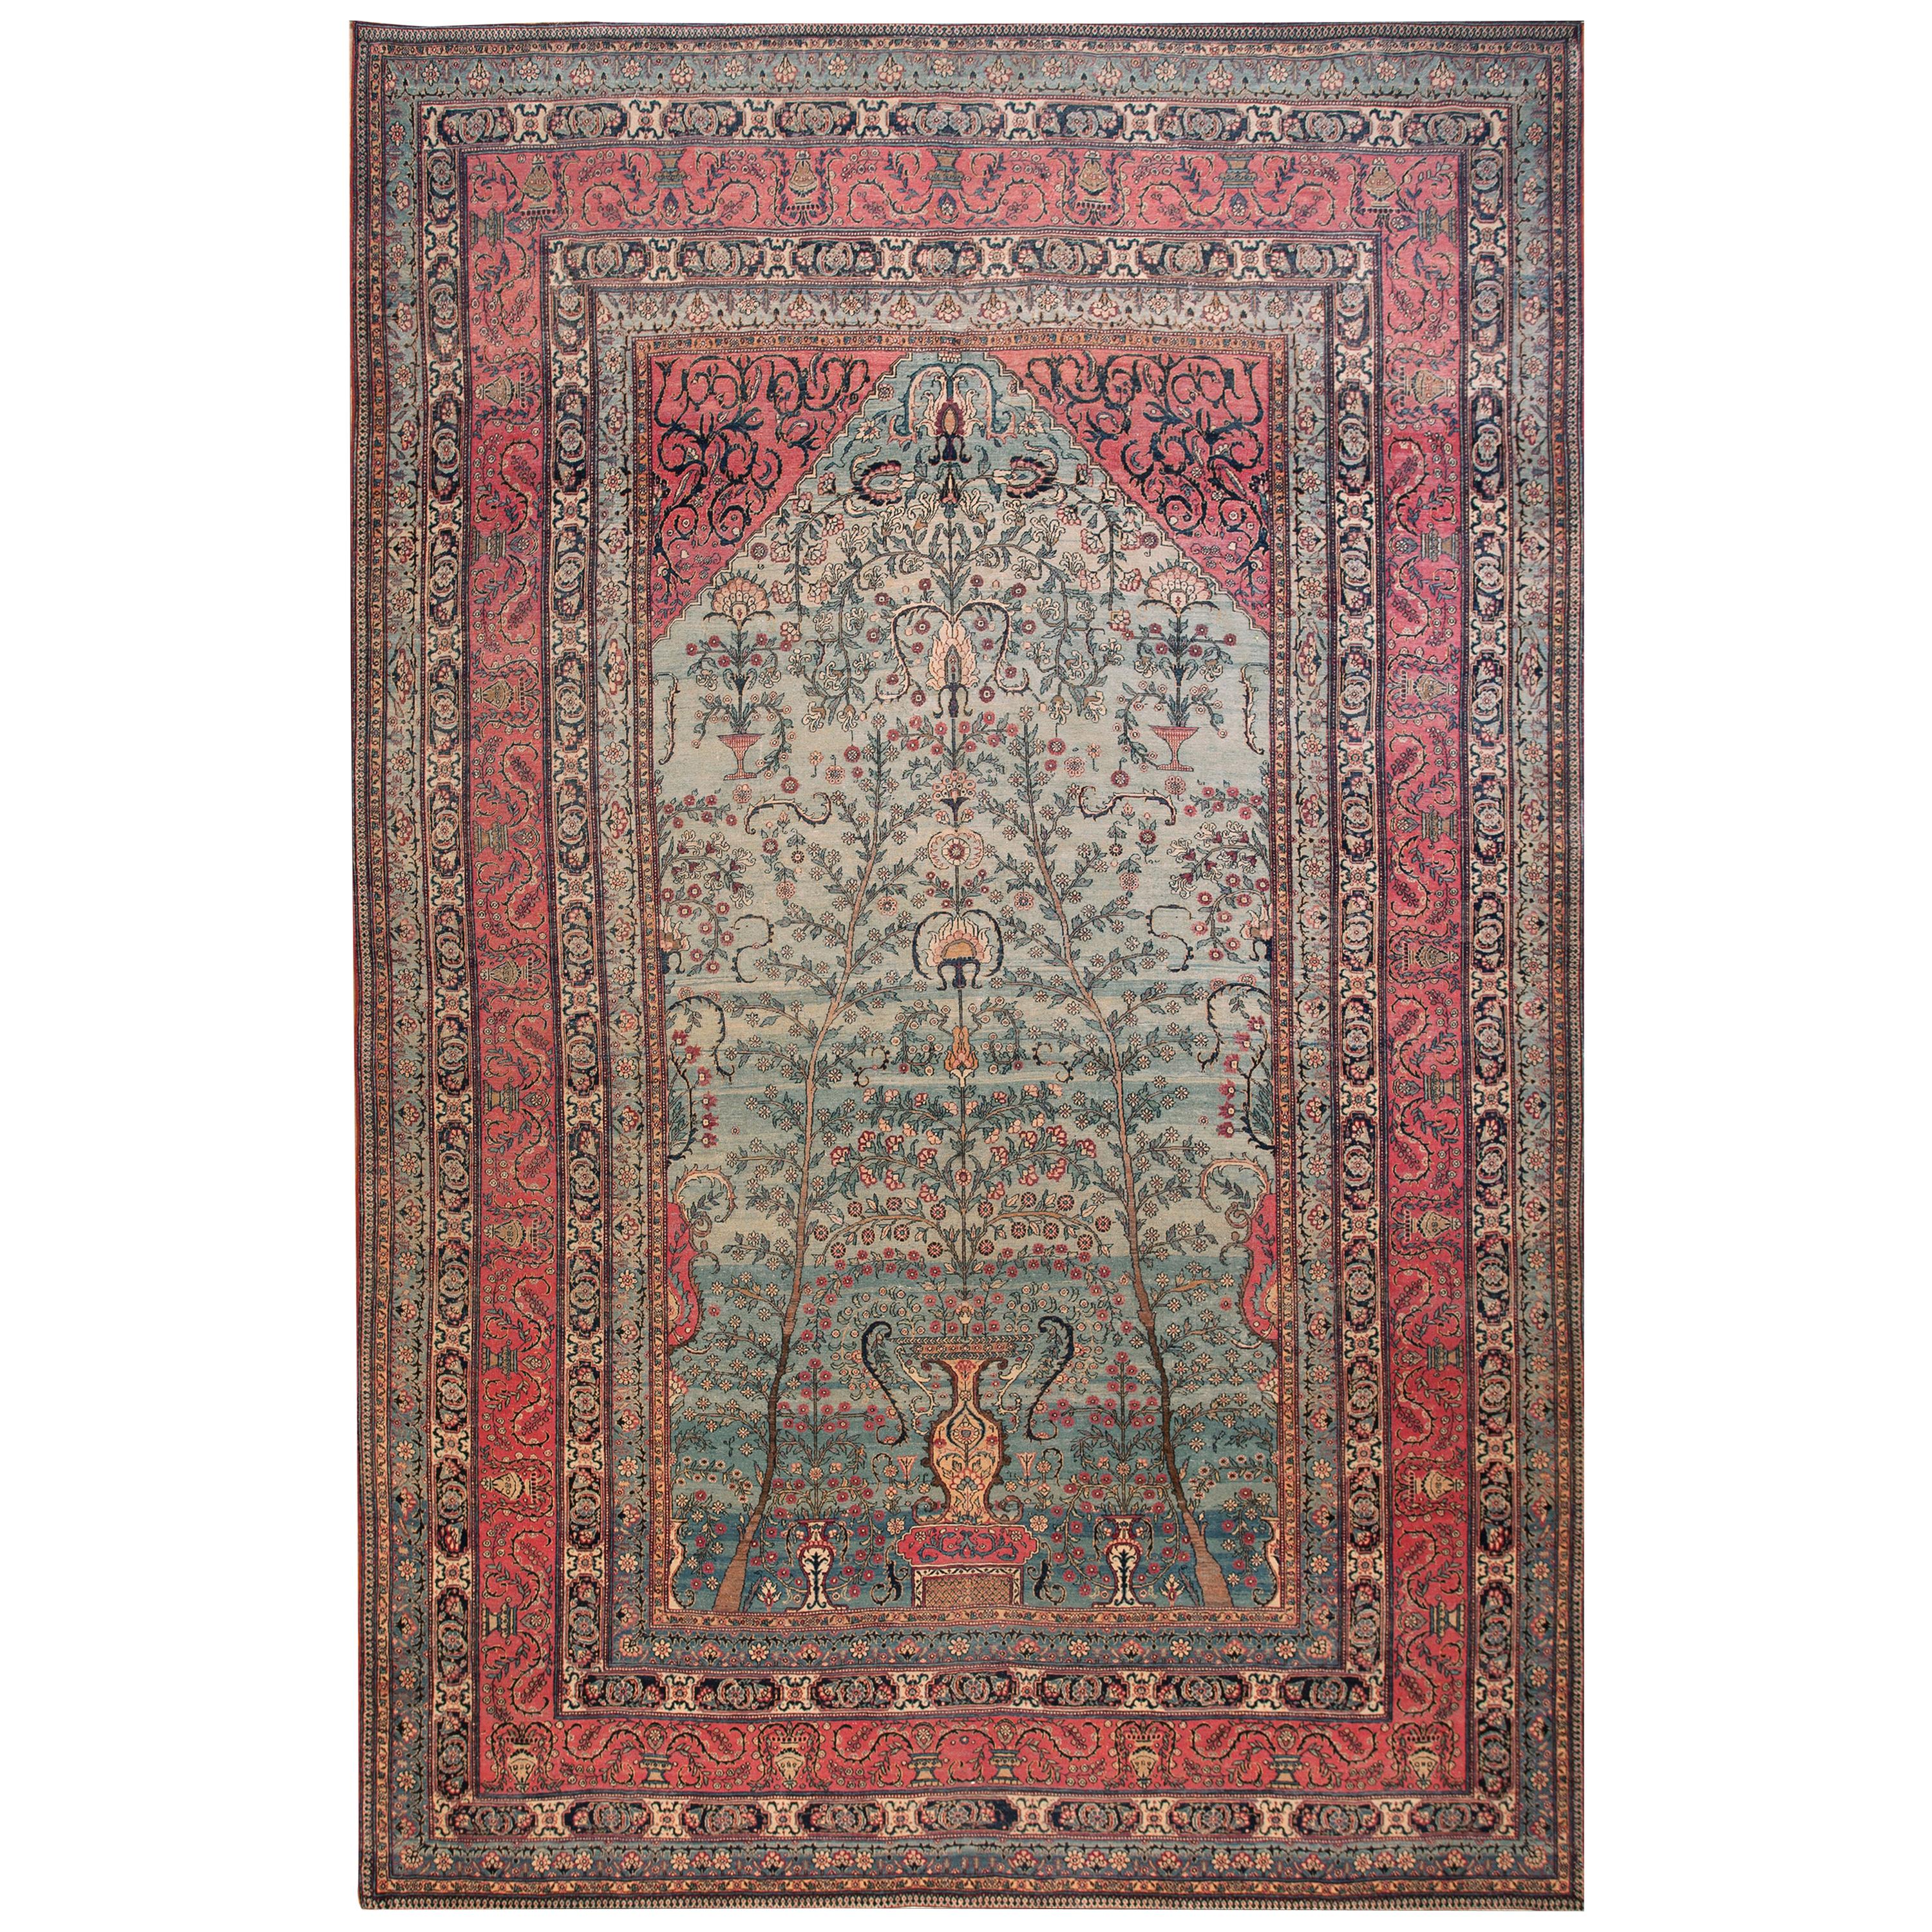 Late 19th Century Persian Tehran Carpet ( 9'6" x 13'10" - 290 x 422 ) For Sale